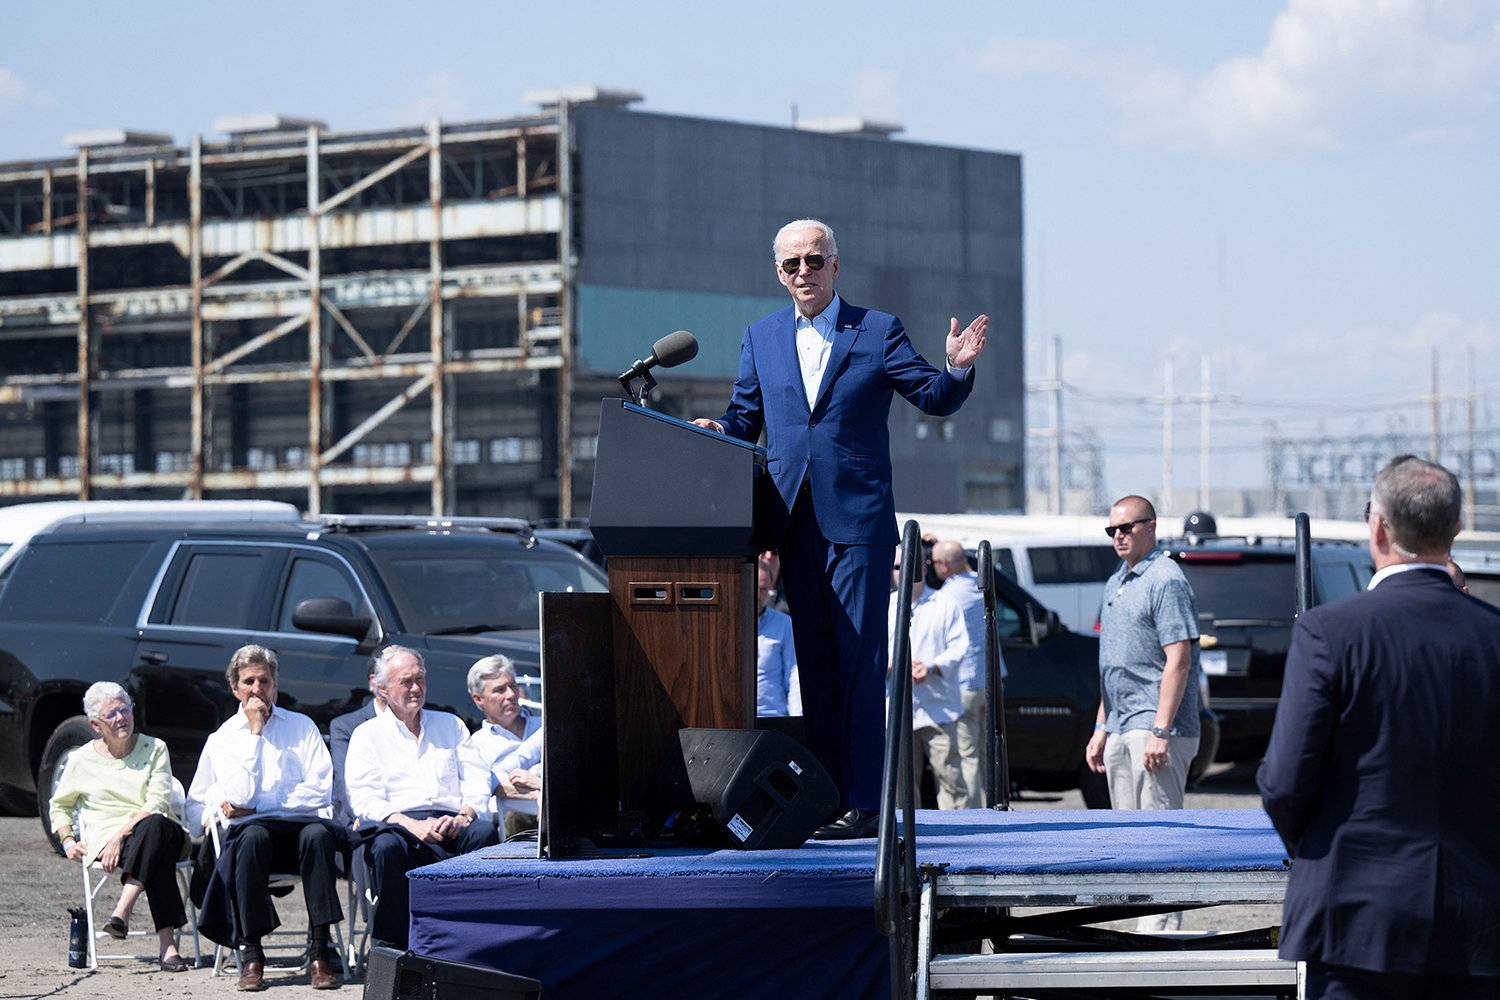 U.S. President Joe Biden delivers remarks at the former location of the Brayton Point Power Station in Somerset, Massachussets, on July 20, 2022. (Brendan Smialowski/AFP via Getty Images/TNS)